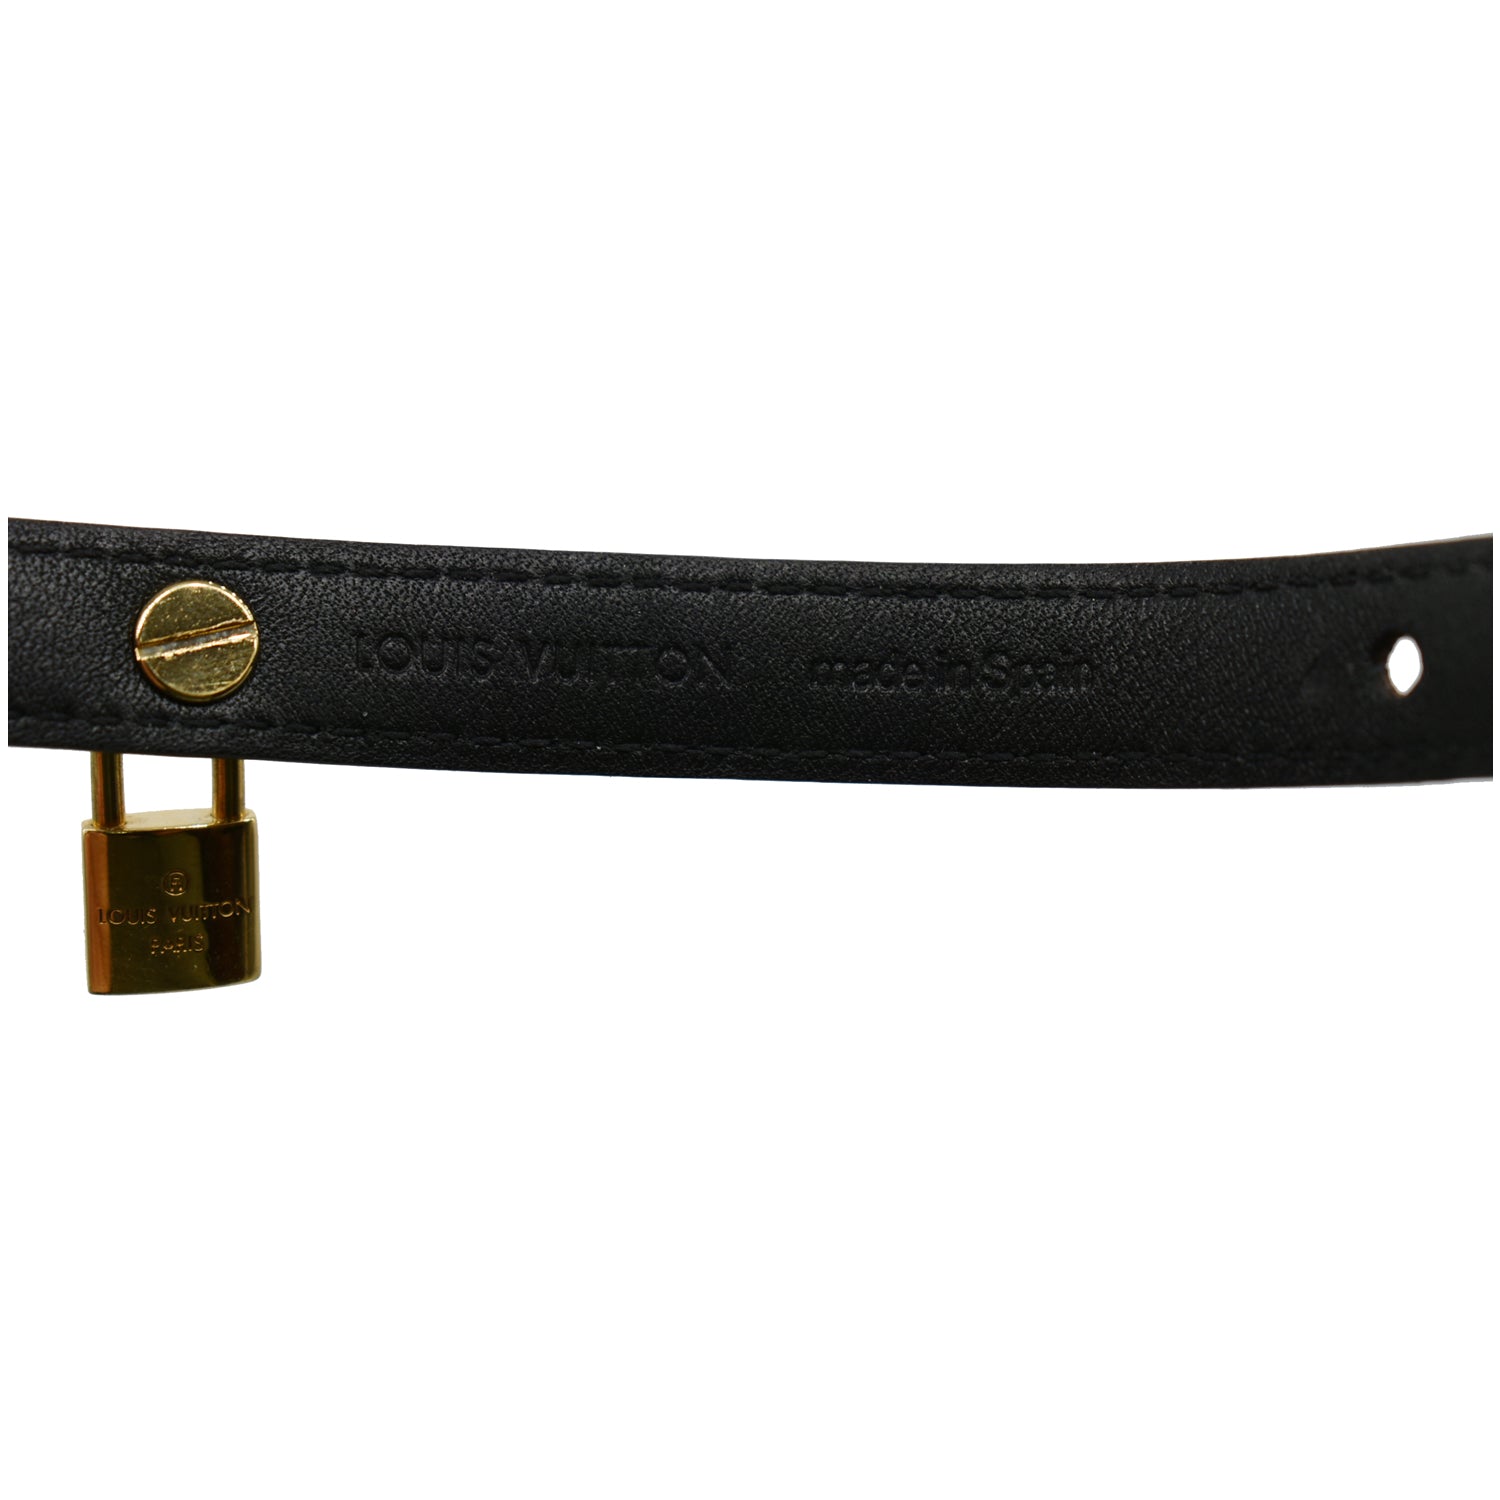 Louis Vuitton Monogram Leather Bracelet Brown 19cm Length Shipping